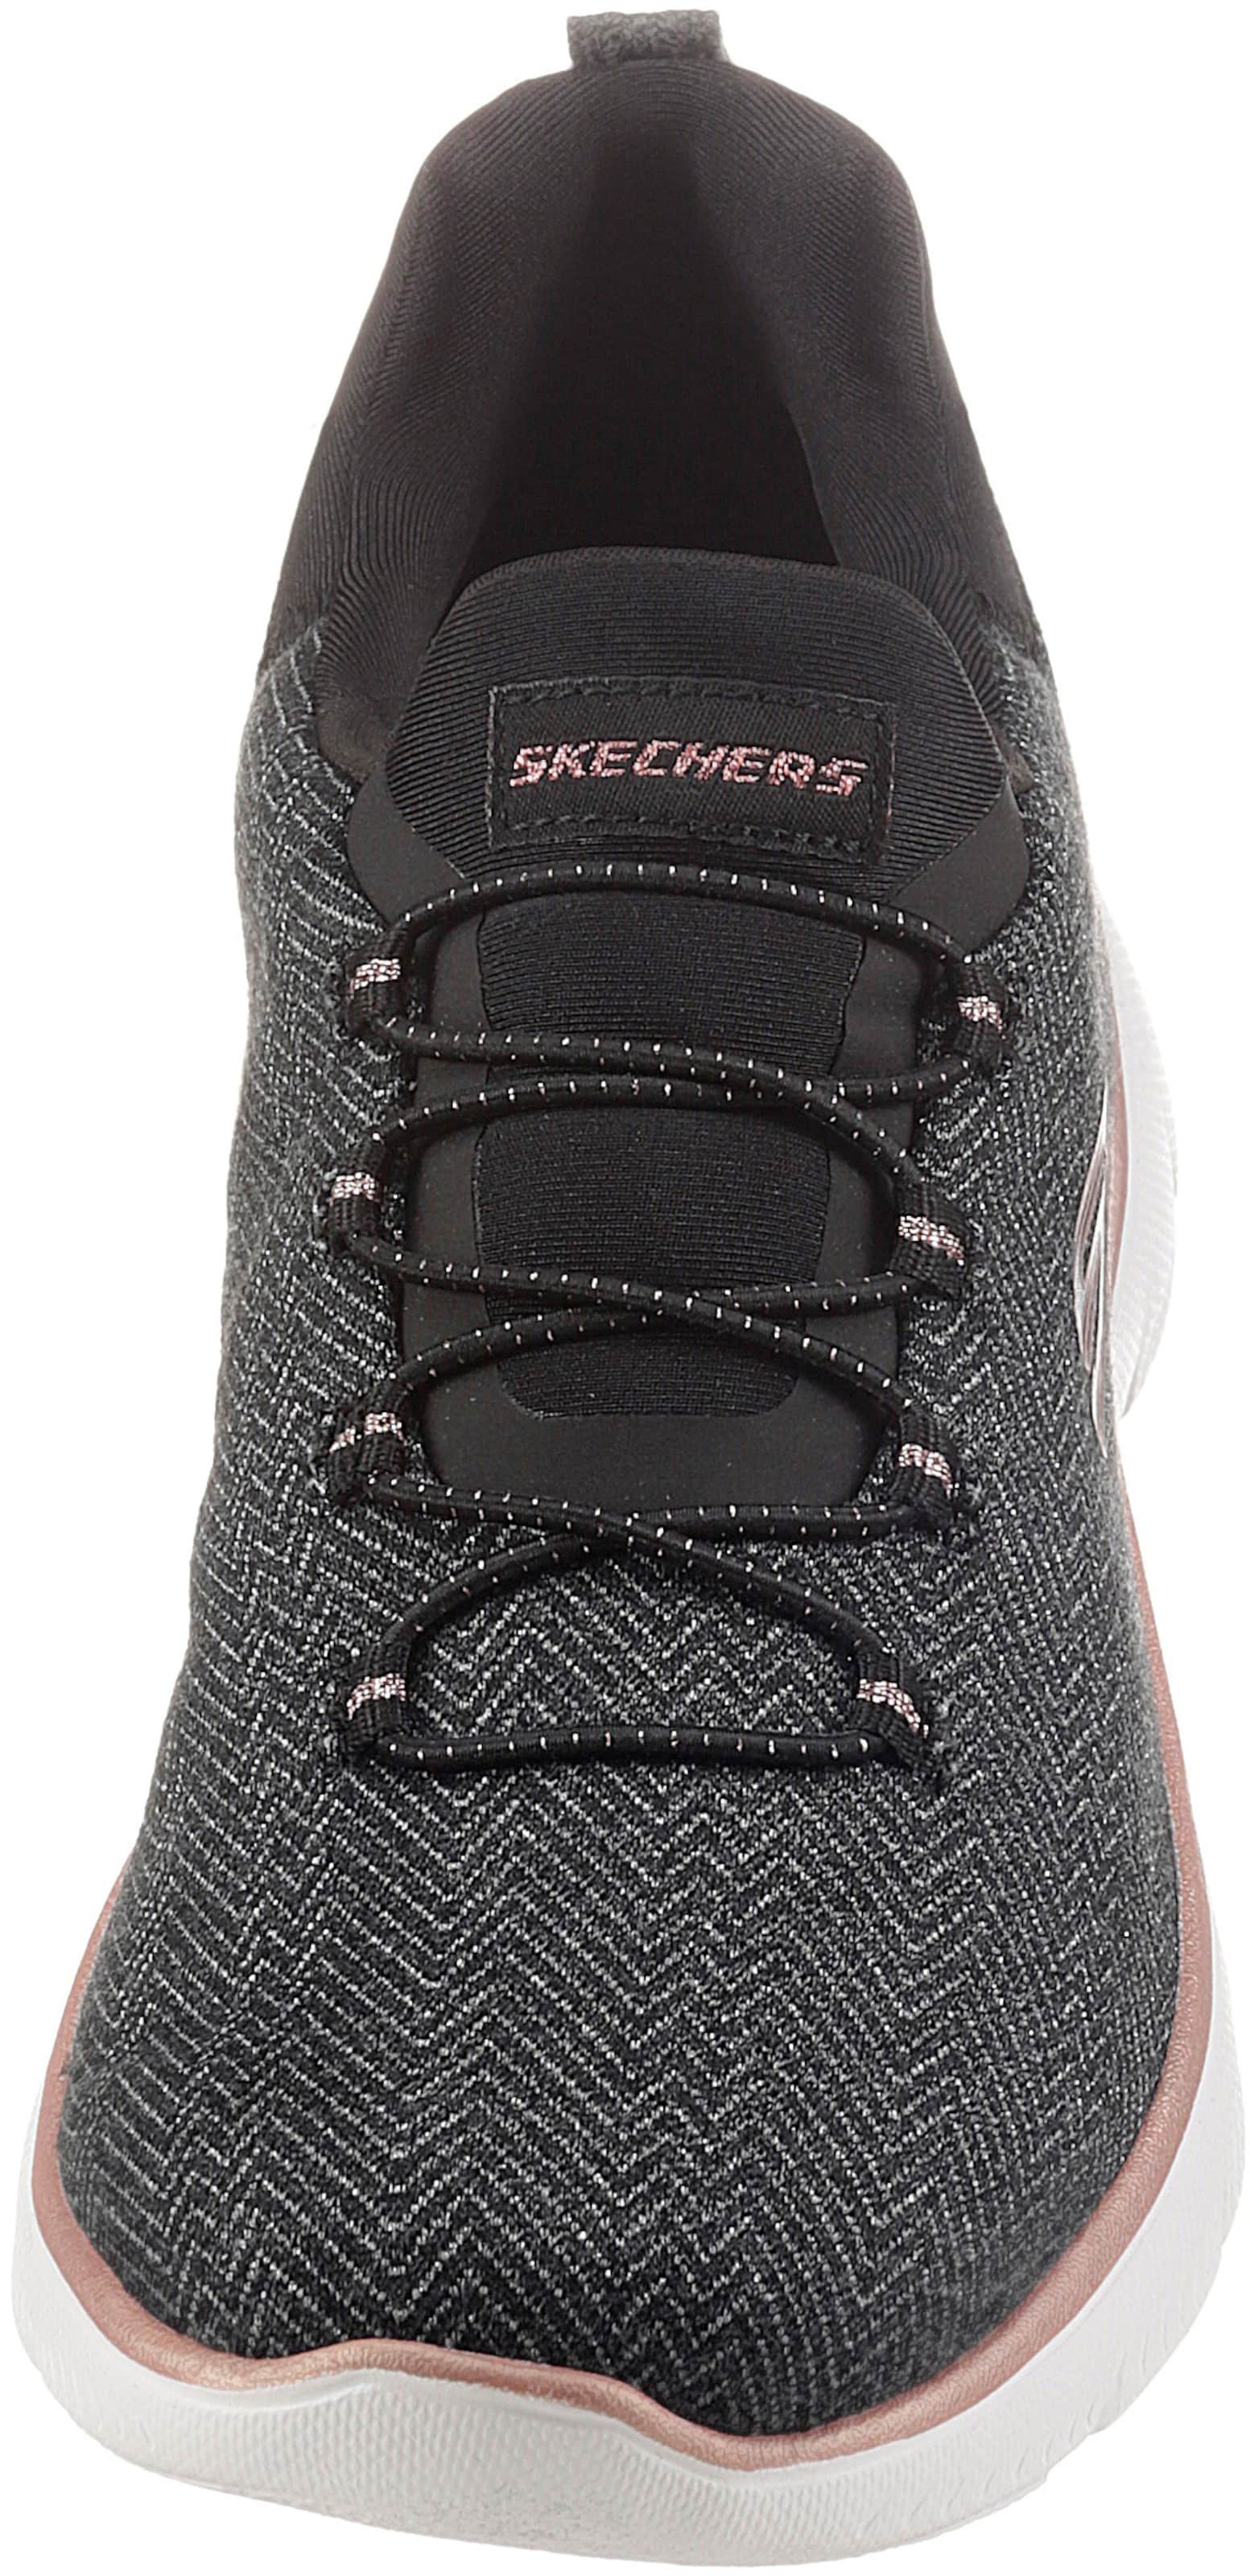 Sneaker in günstig Kaufen-Slip-On Sneaker in schwarz-meliert von Skechers. Slip-On Sneaker in schwarz-meliert von Skechers <![CDATA[Slipper, Skechers, Textil-Synthetik kombiniert]]>. 